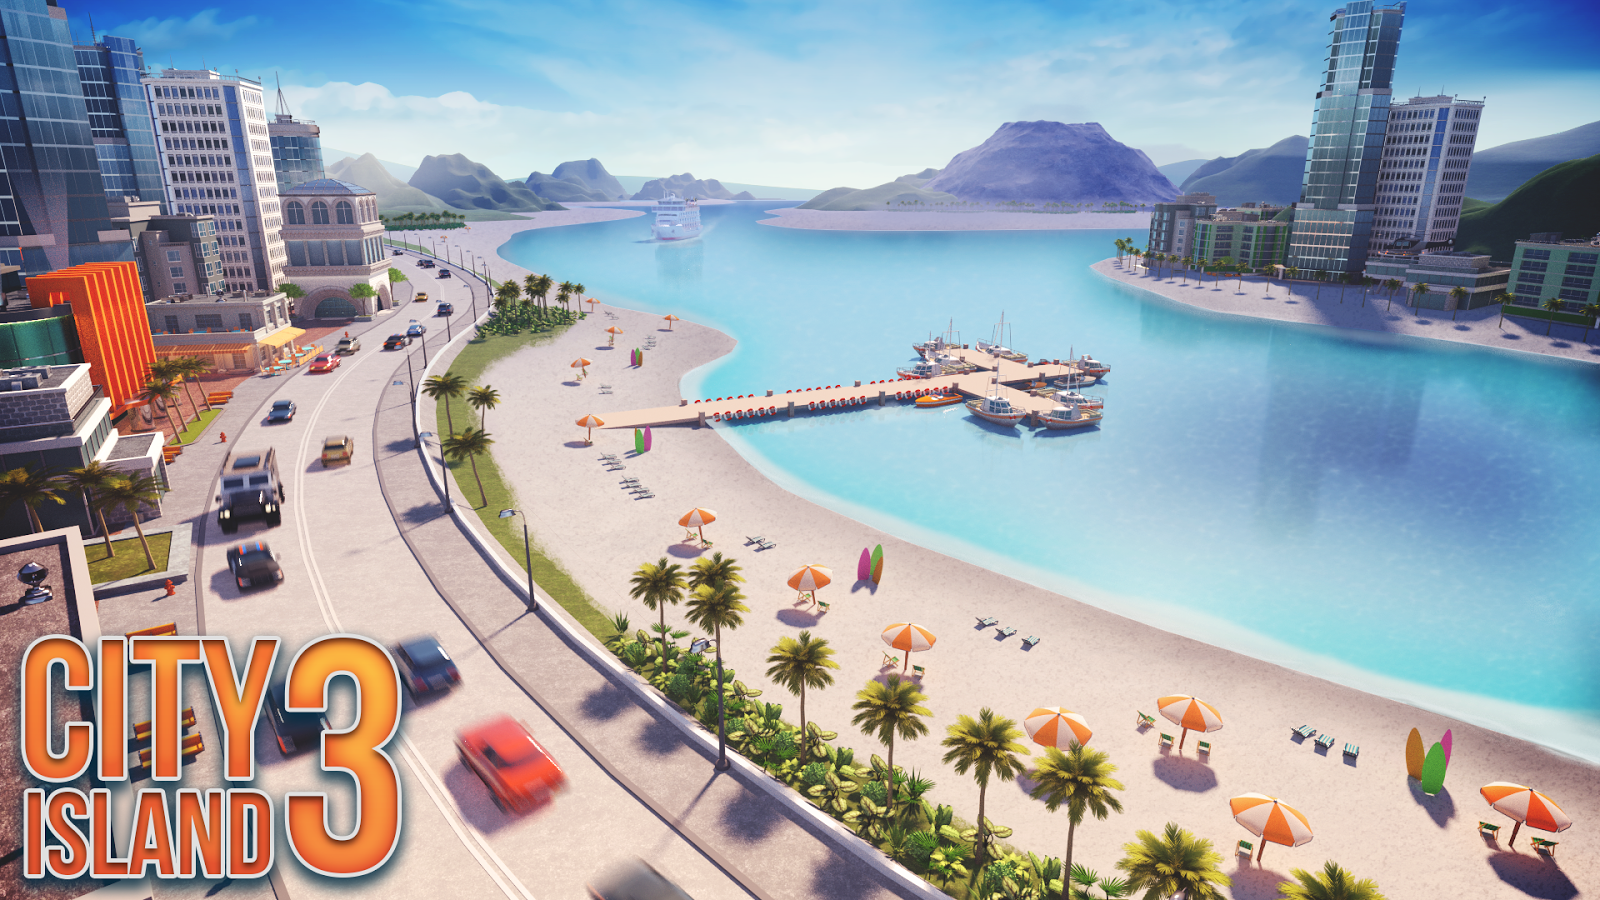 City Island 3 - Building Sim v1.8.10 APK (MOD, unlimited money) Android Free